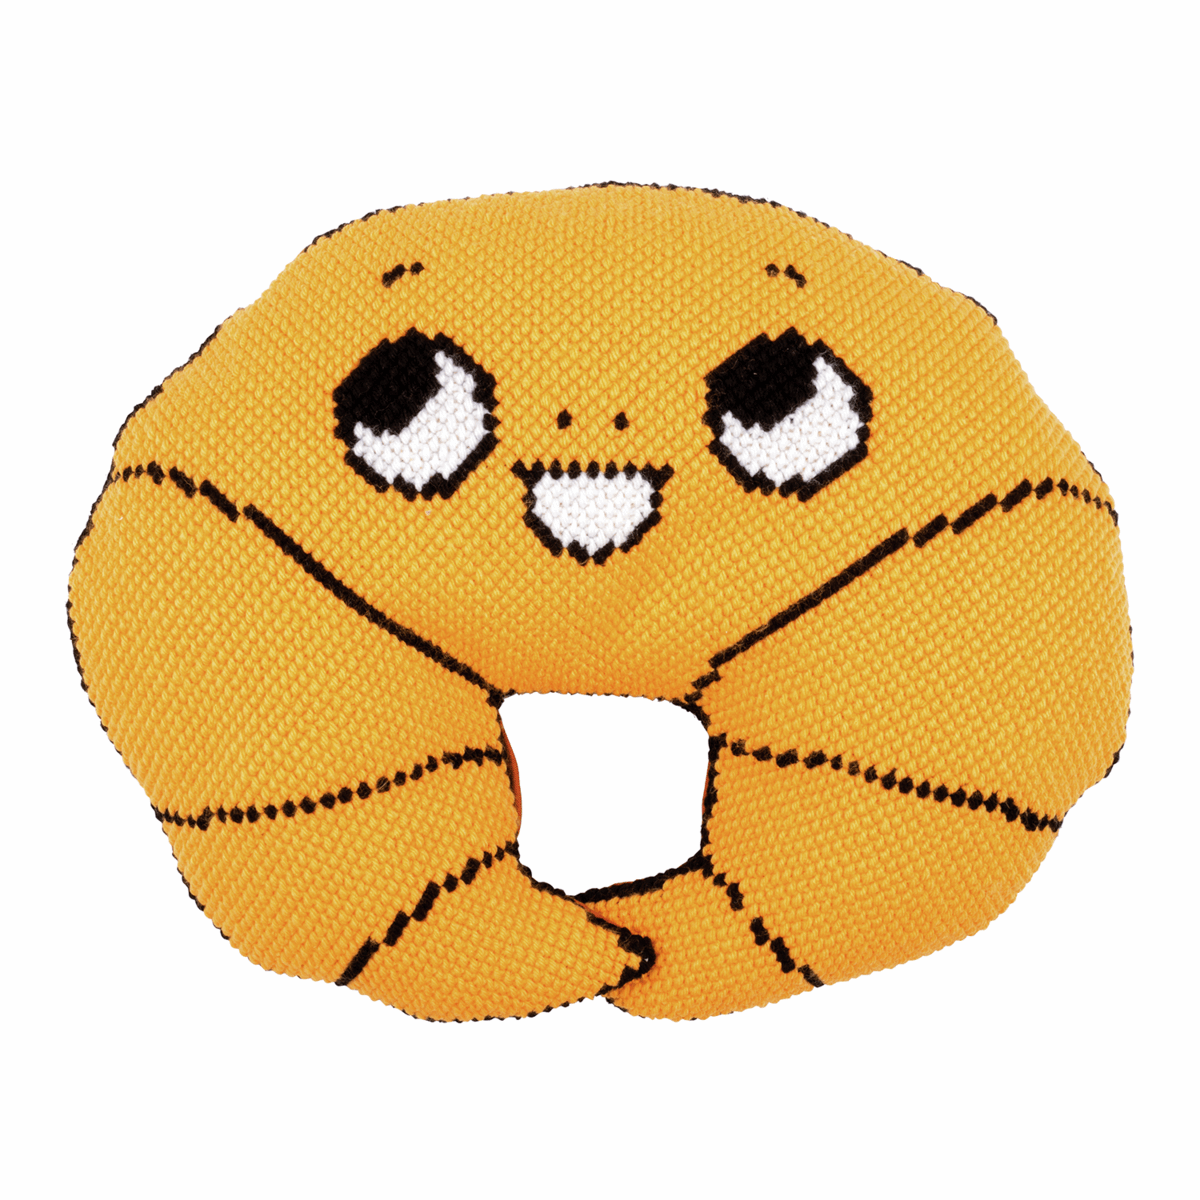 Vervaco Cross Stitch Cushion Kit - Eva Mouton: Croissant